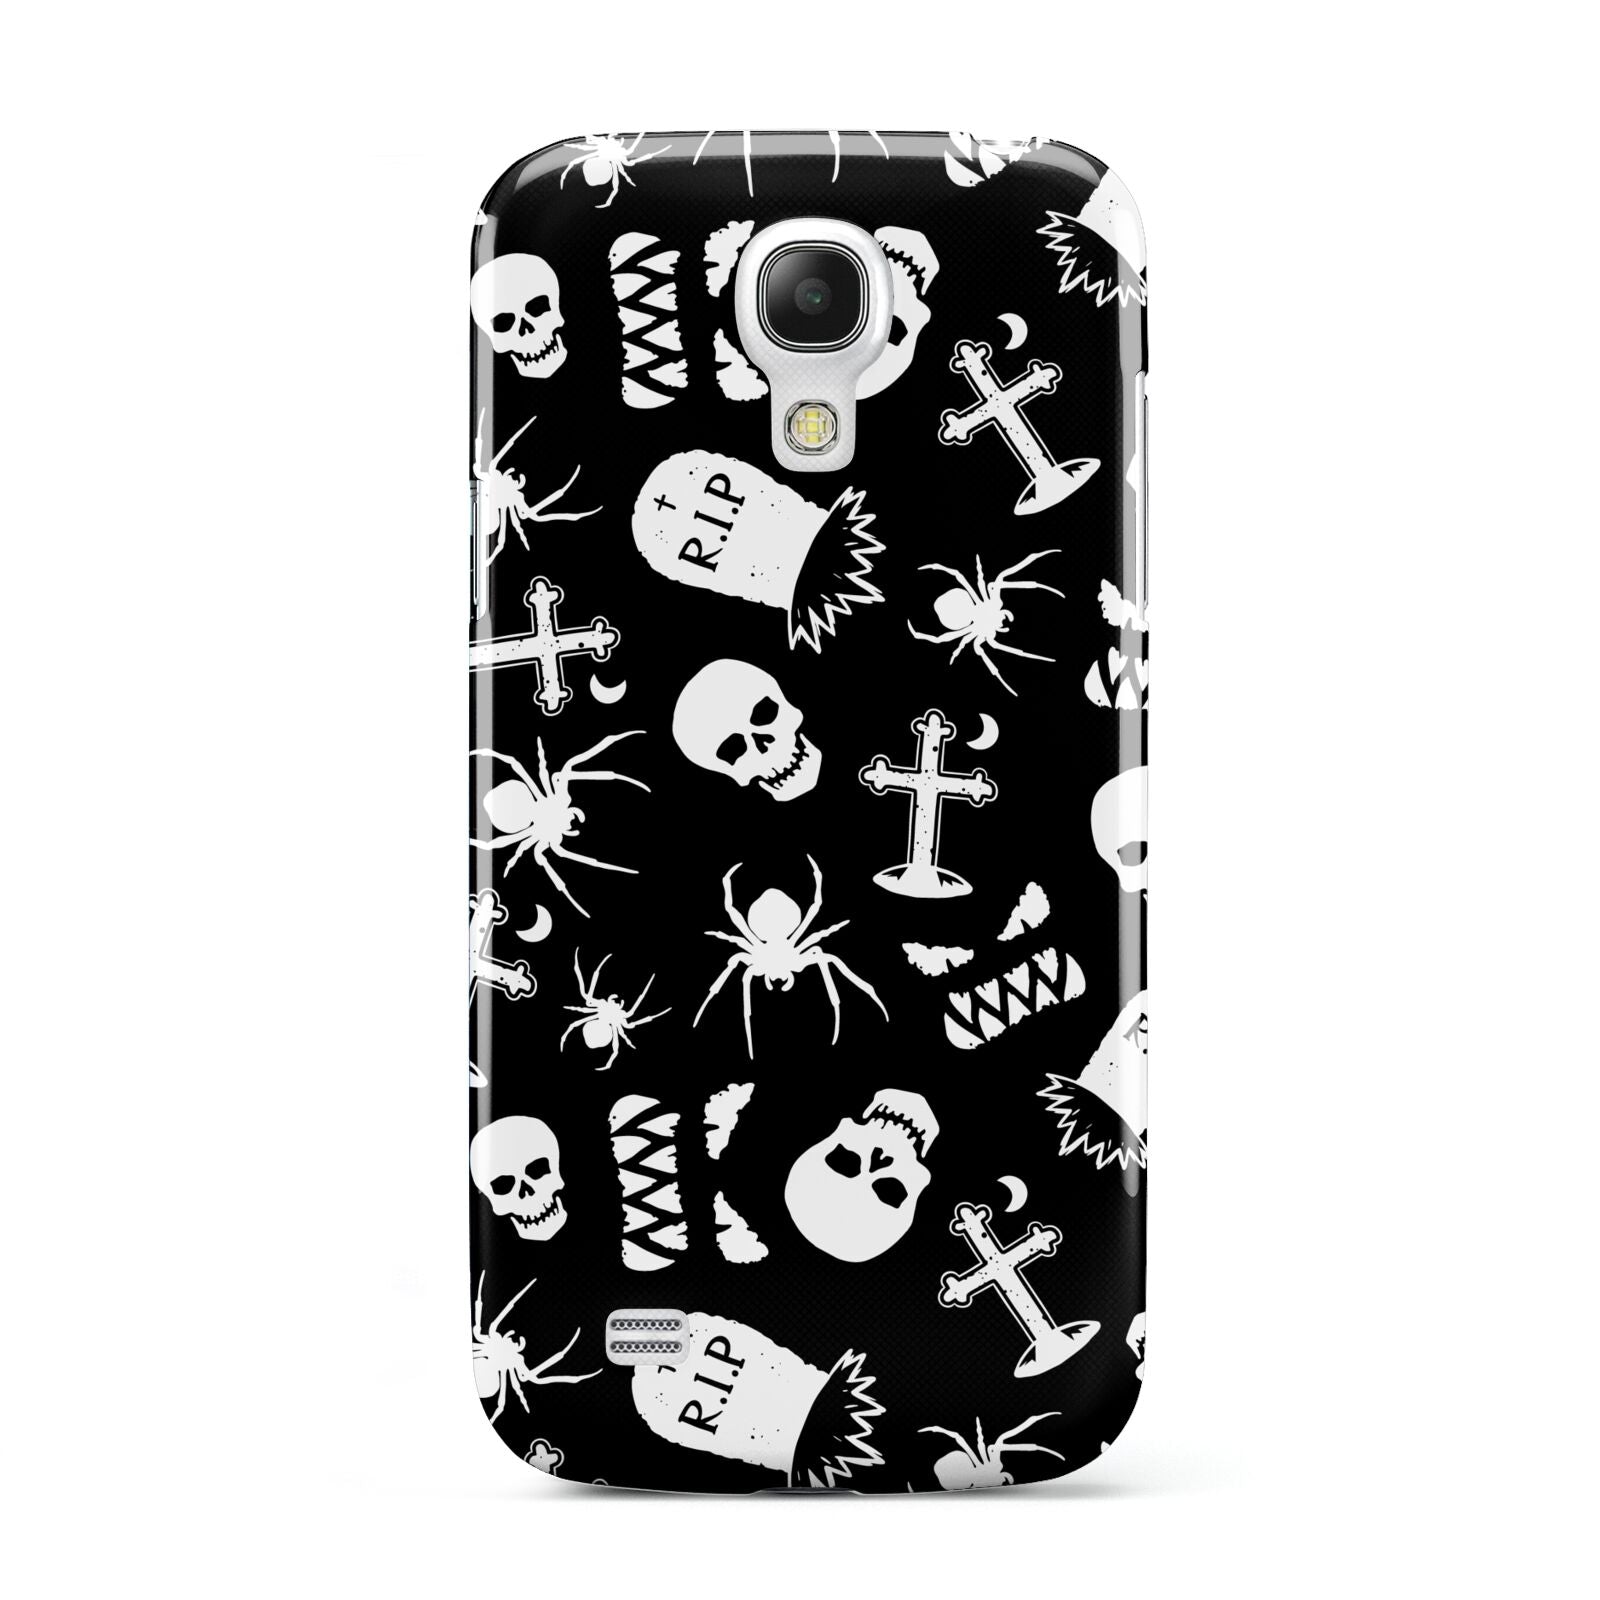 Spooky Illustrations Samsung Galaxy S4 Mini Case